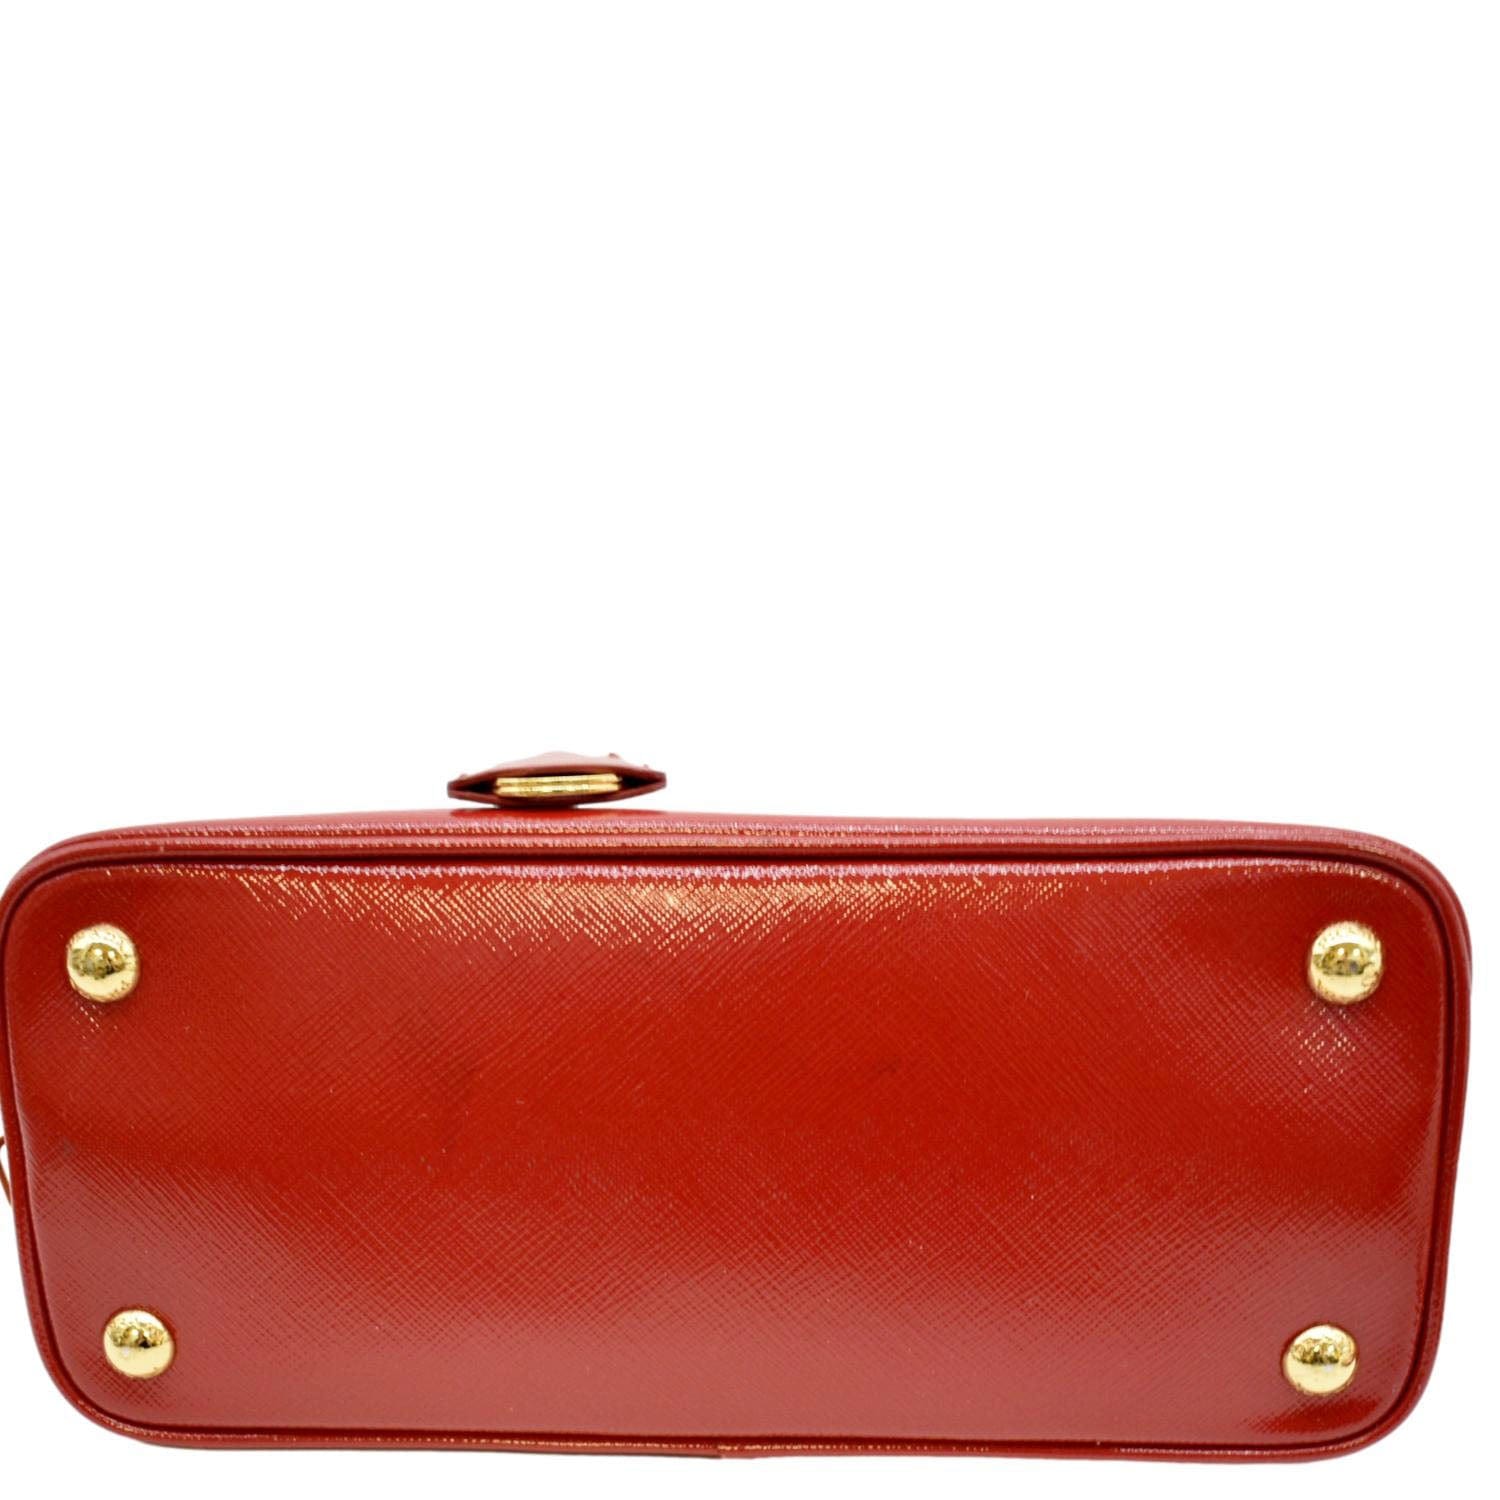 Prada Vintage - Patent Leather Satchel Bag - Red - Leather Handbag